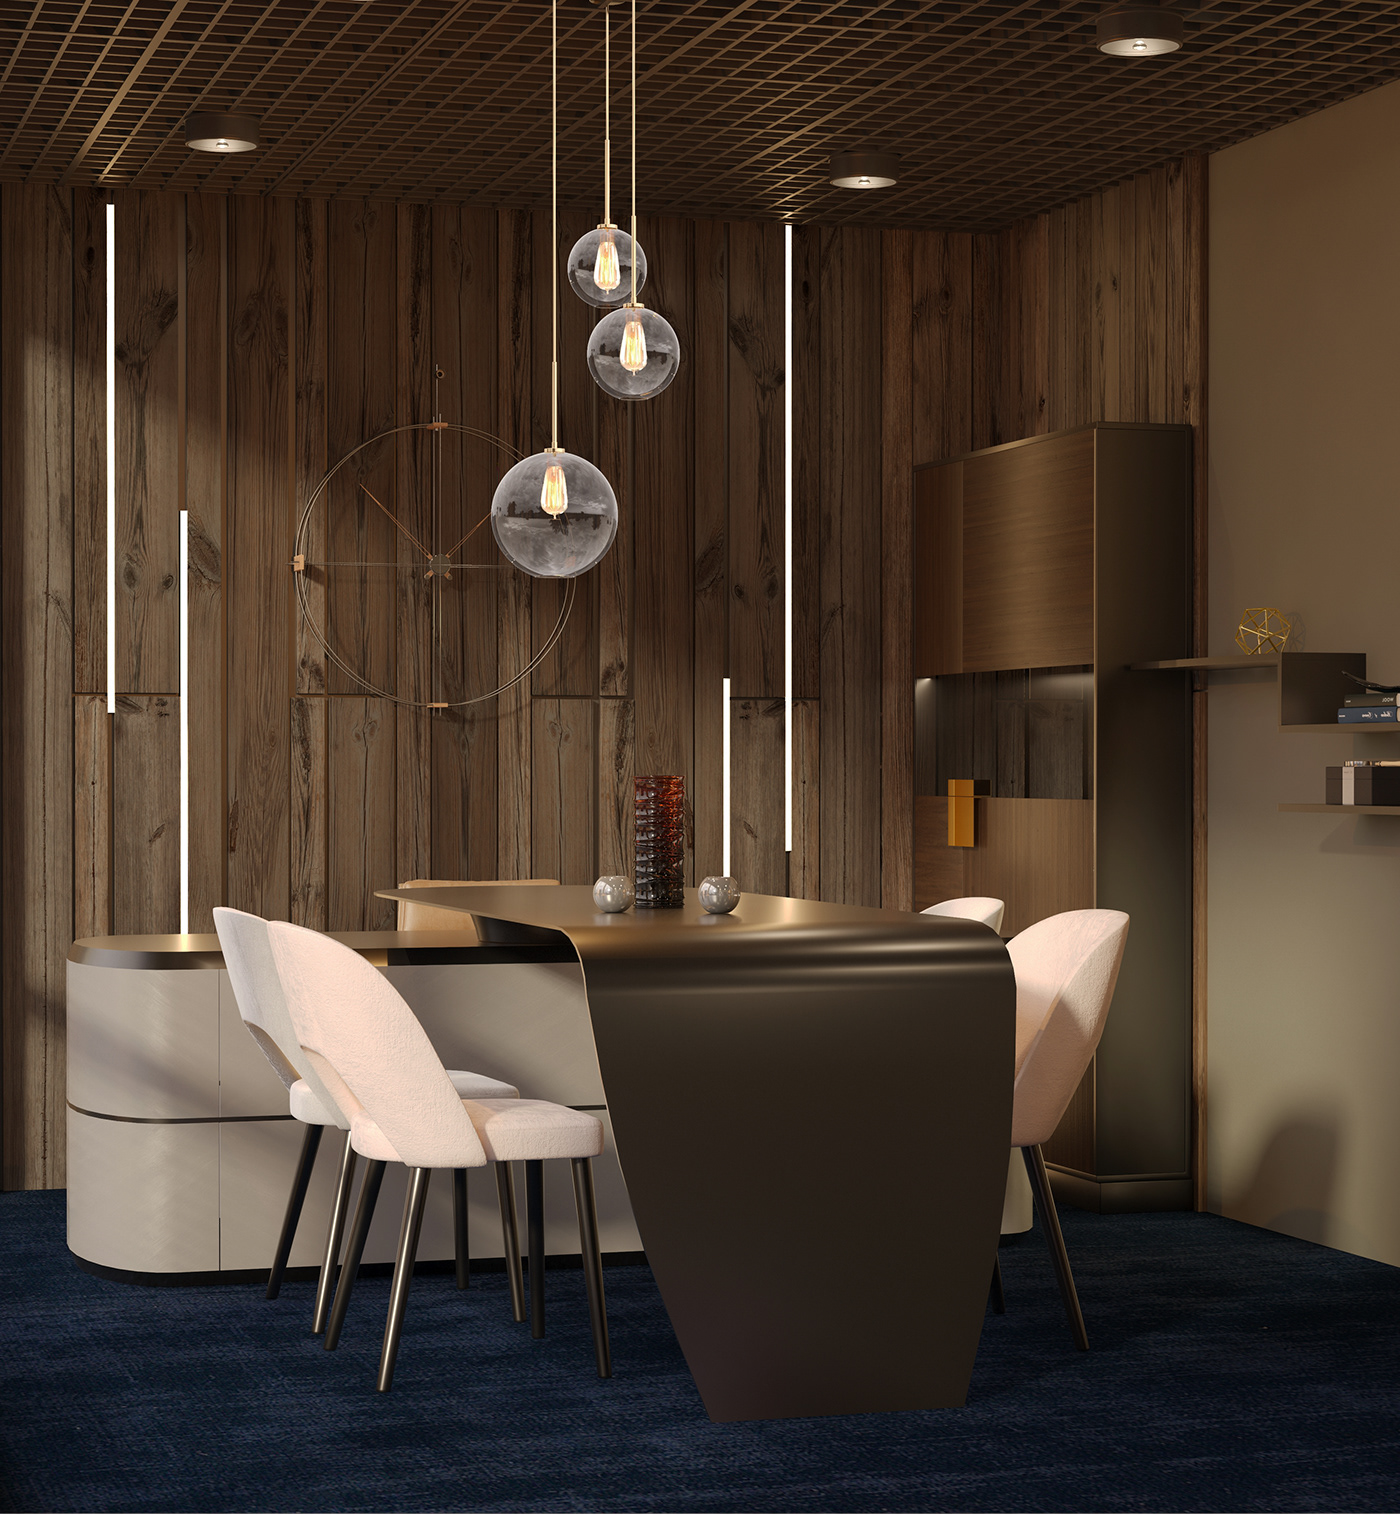 3dsmax 3Dvizualization Interior interiordesign interiordesigner officedesign Vizualization